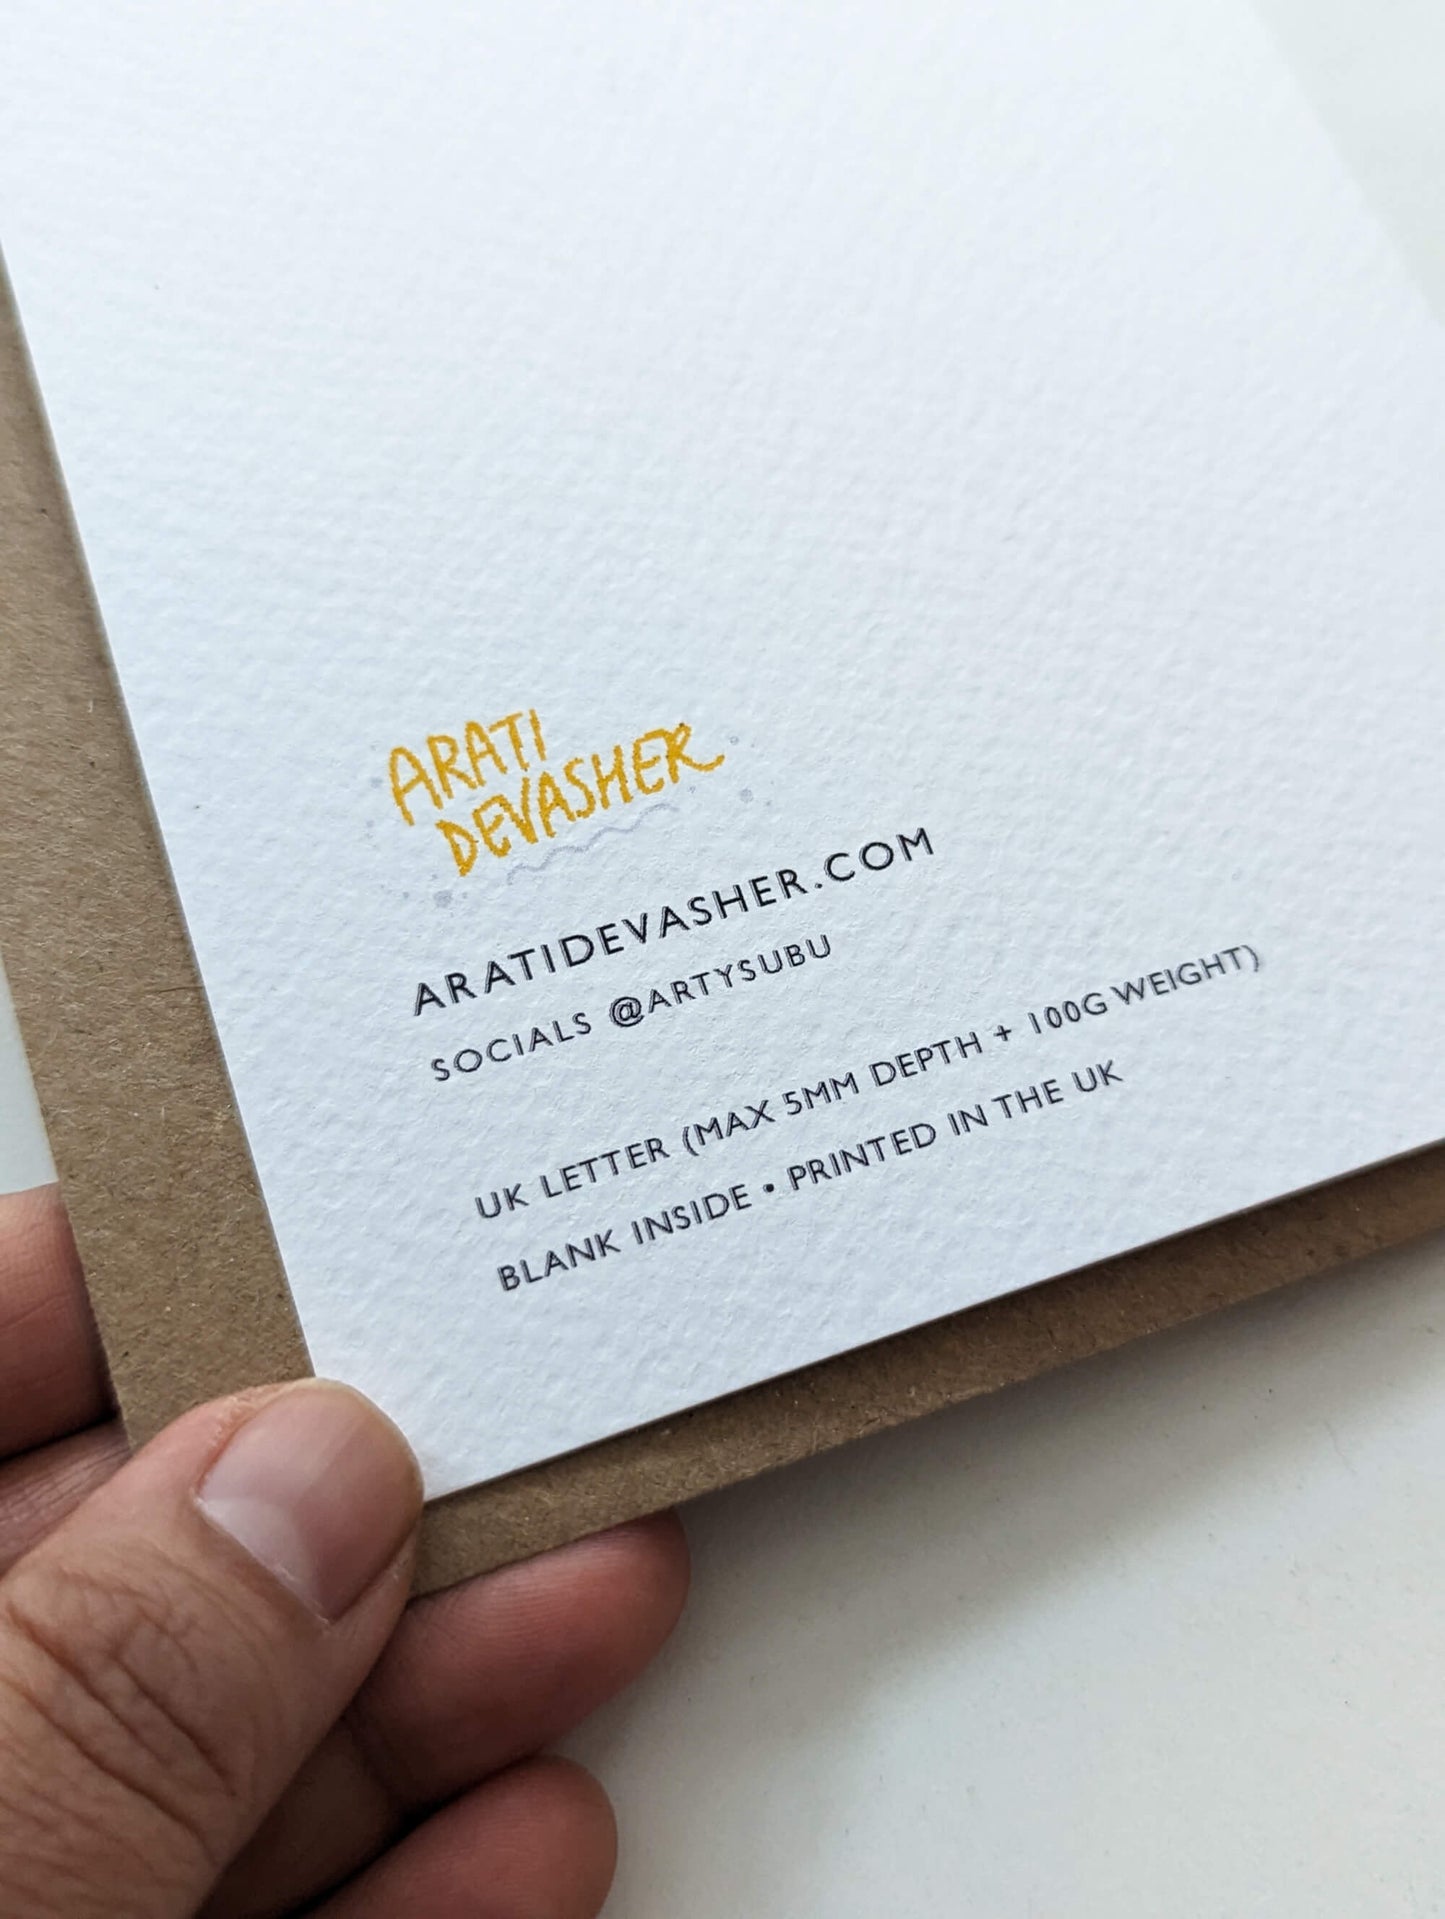 Mr & Mr wedding / anniversary – floral greeting card